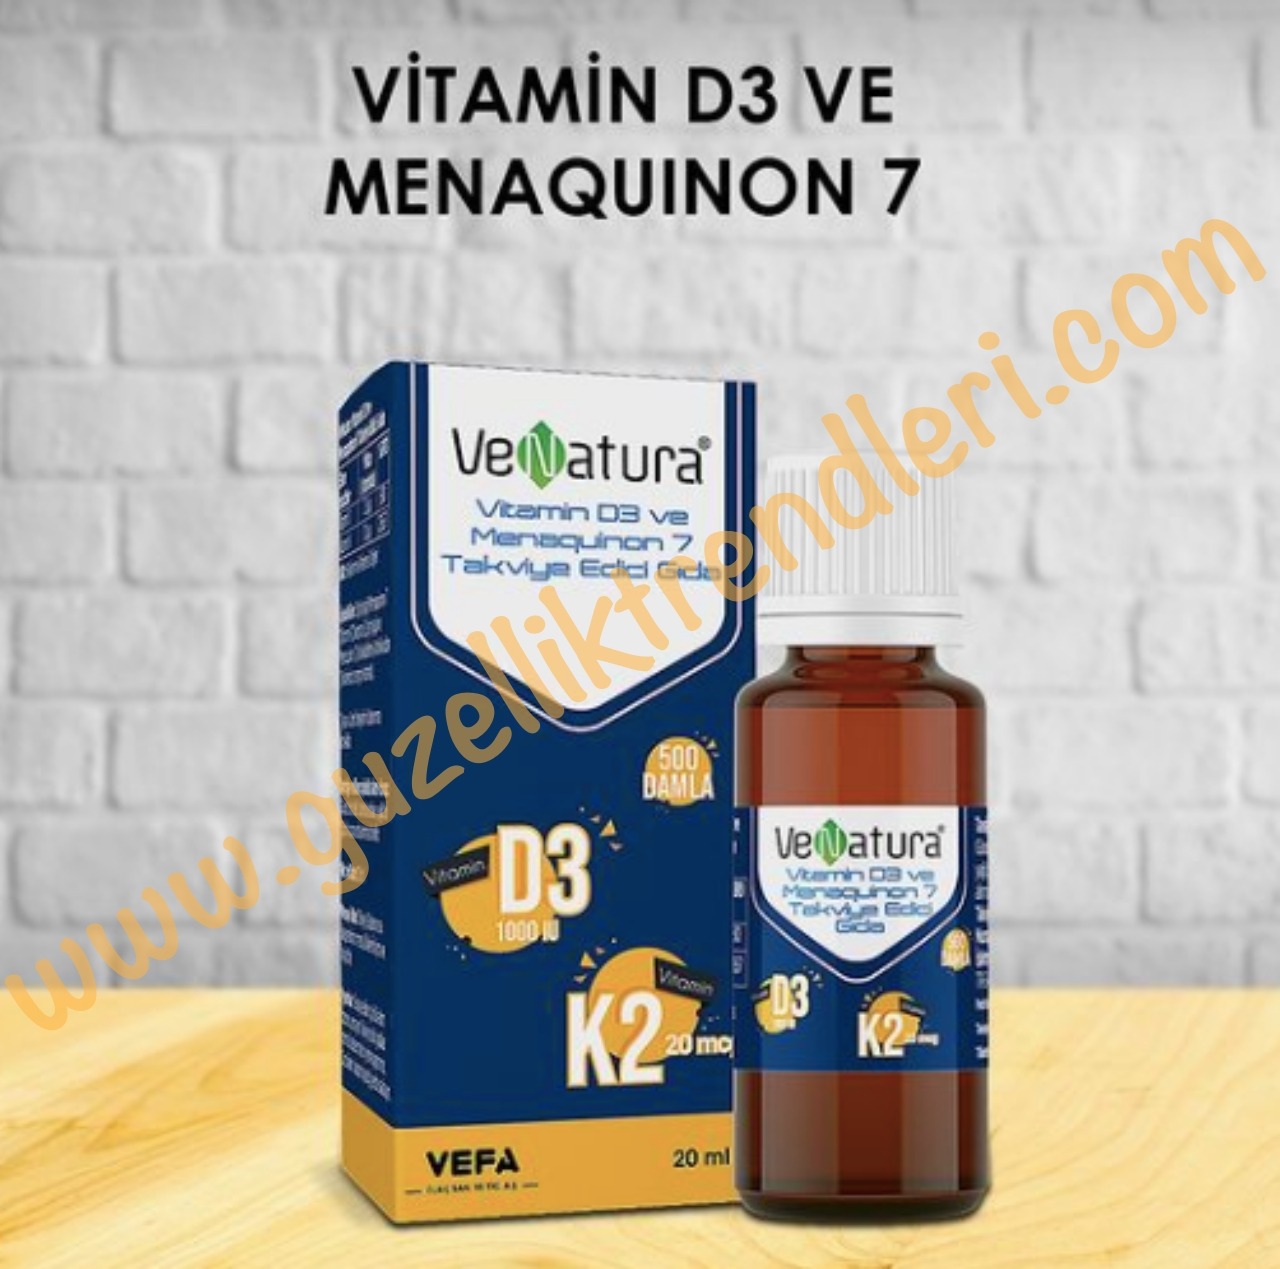 venatura d vitamini k2 kaç damla, venatura vitamin d3, venatura vitamin d3 k2 nasıl kullanılır, venatura vitamin d3 k2 ne işe yarar, venatura vitamin d3 kullananlar, venatura vitamin d3 menaquinone 7 yorumlar, venatura vitamin d3 nasıl kullanılır, venatura vitamin d3 ve k2, venatura vitamin d3 ve k2 20ml damla en ucuz, venatura vitamin d3 ve k2 20ml damla nasıl kullanılır, venatura vitamin d3 ve menaquinon 7, venatura vitamin d3 ve menaquinon 7 20 ml, venatura vitamin d3 ve menaquinon 7 kullananlar, venatura vitamin d3 ve menaquinon 7 nasıl kullanılır, venatura vitamin d3 yorumları